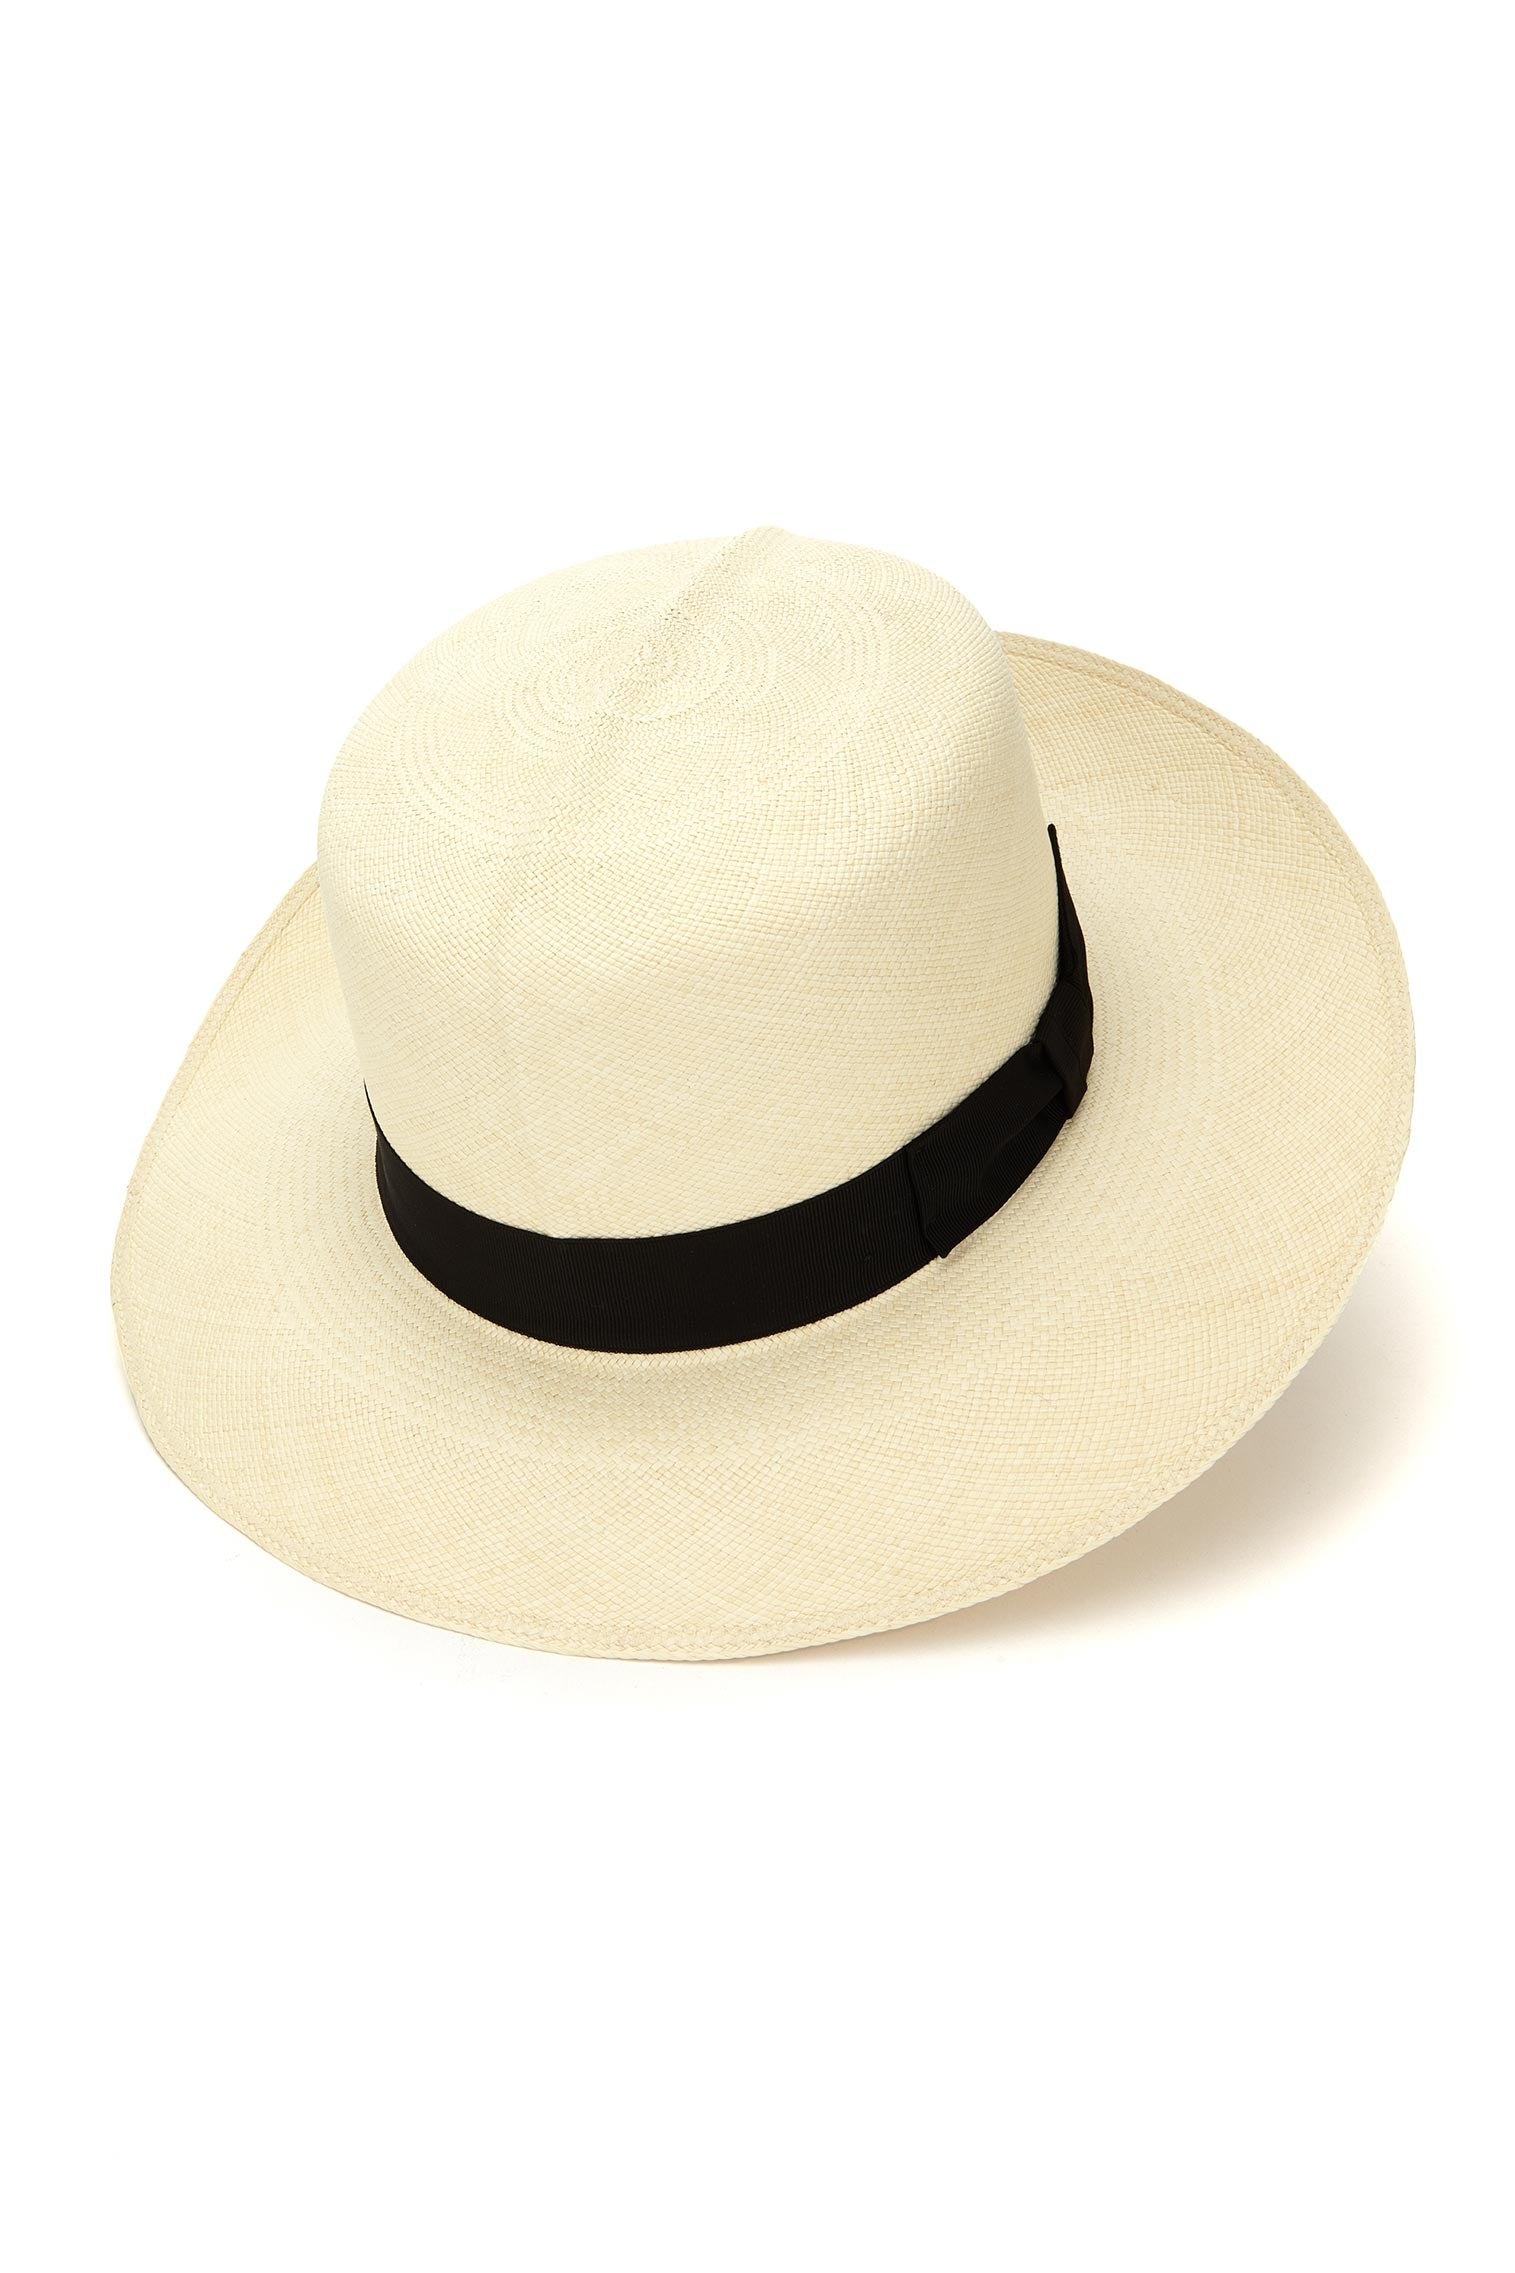 Rollable Superfino Montecristi Panama - Men's Hats - Lock & Co. Hatters London UK